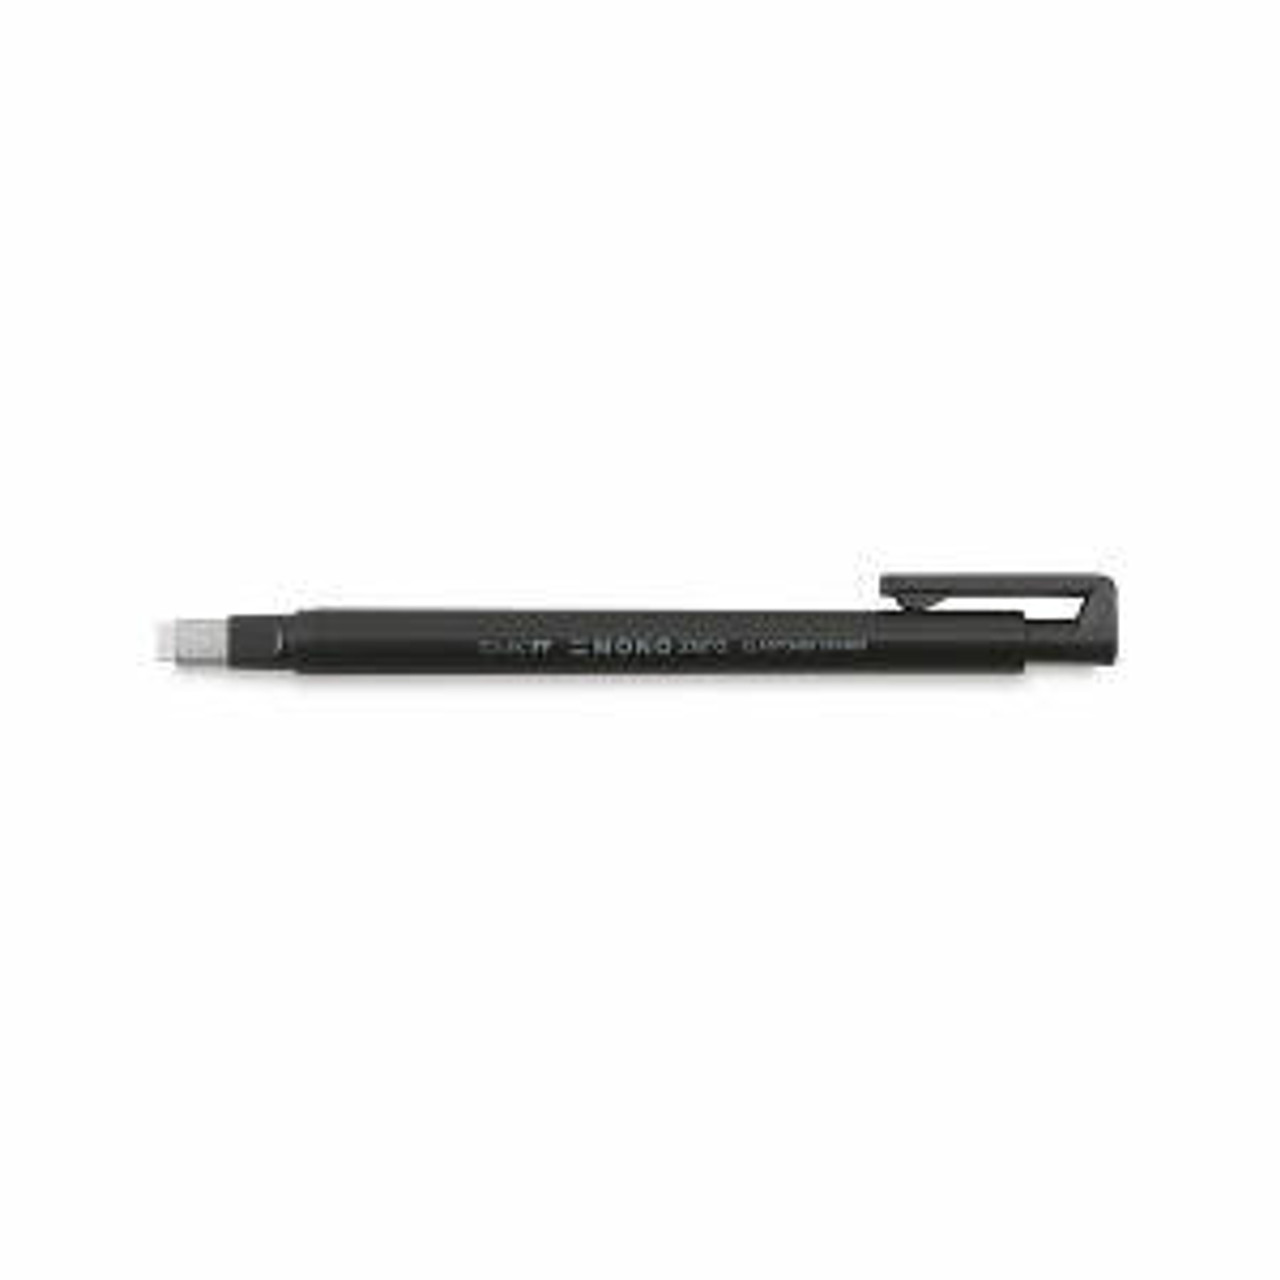 MONO Zero Eraser - Silver Round, Mechanical Eraser, Pen Style Eraser